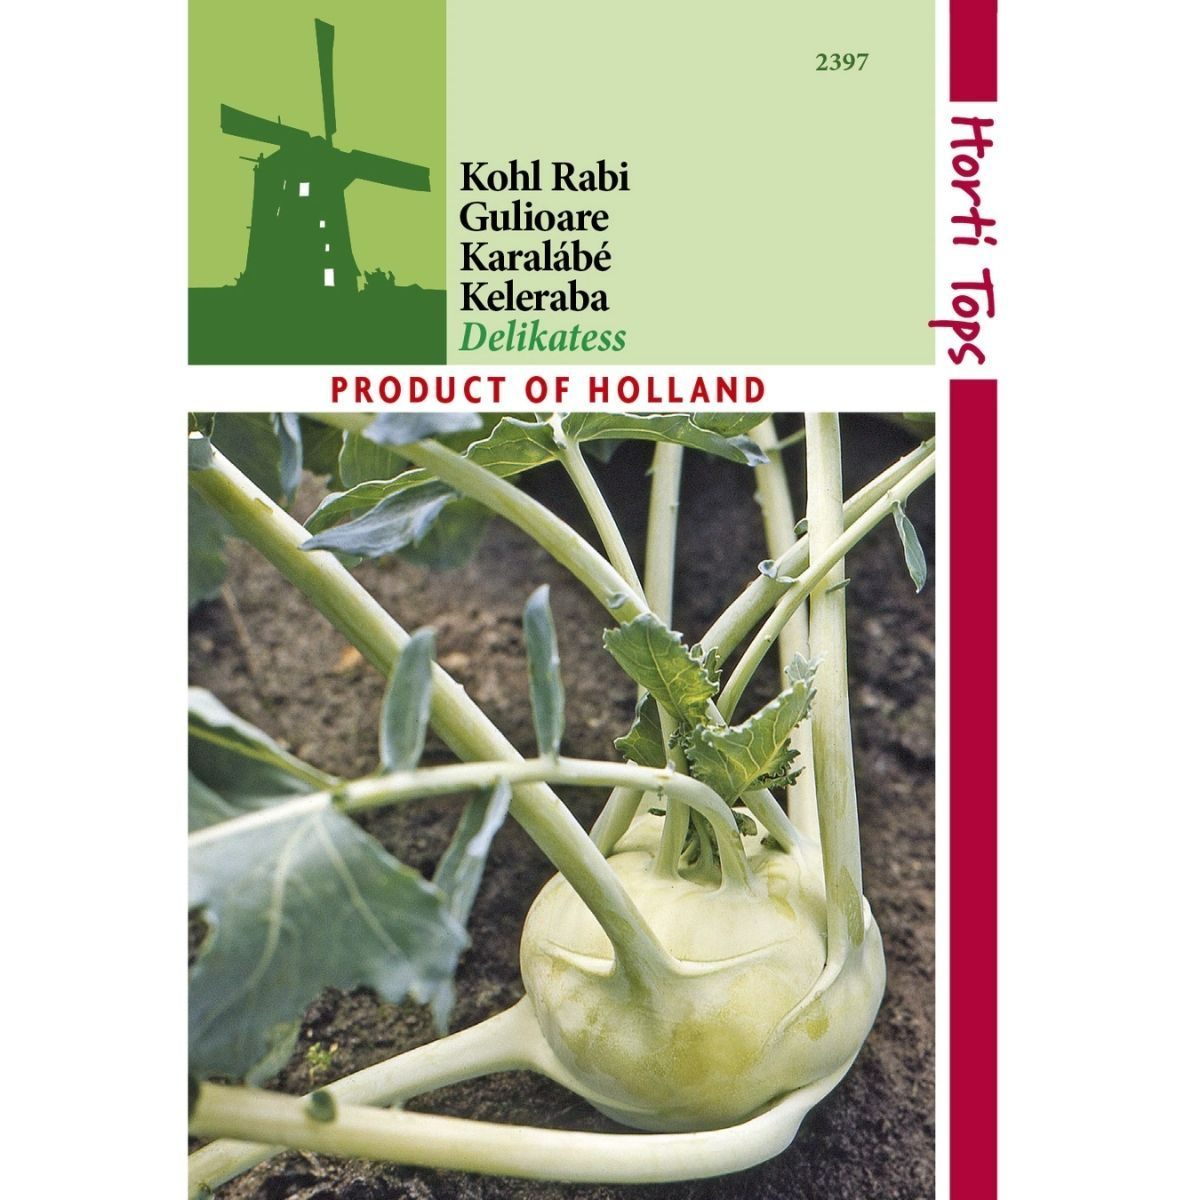 Seminte de legume HOBBY - Seminte Gulii WHITE  DELIKATESS Horti Tops 1 g, hectarul.ro